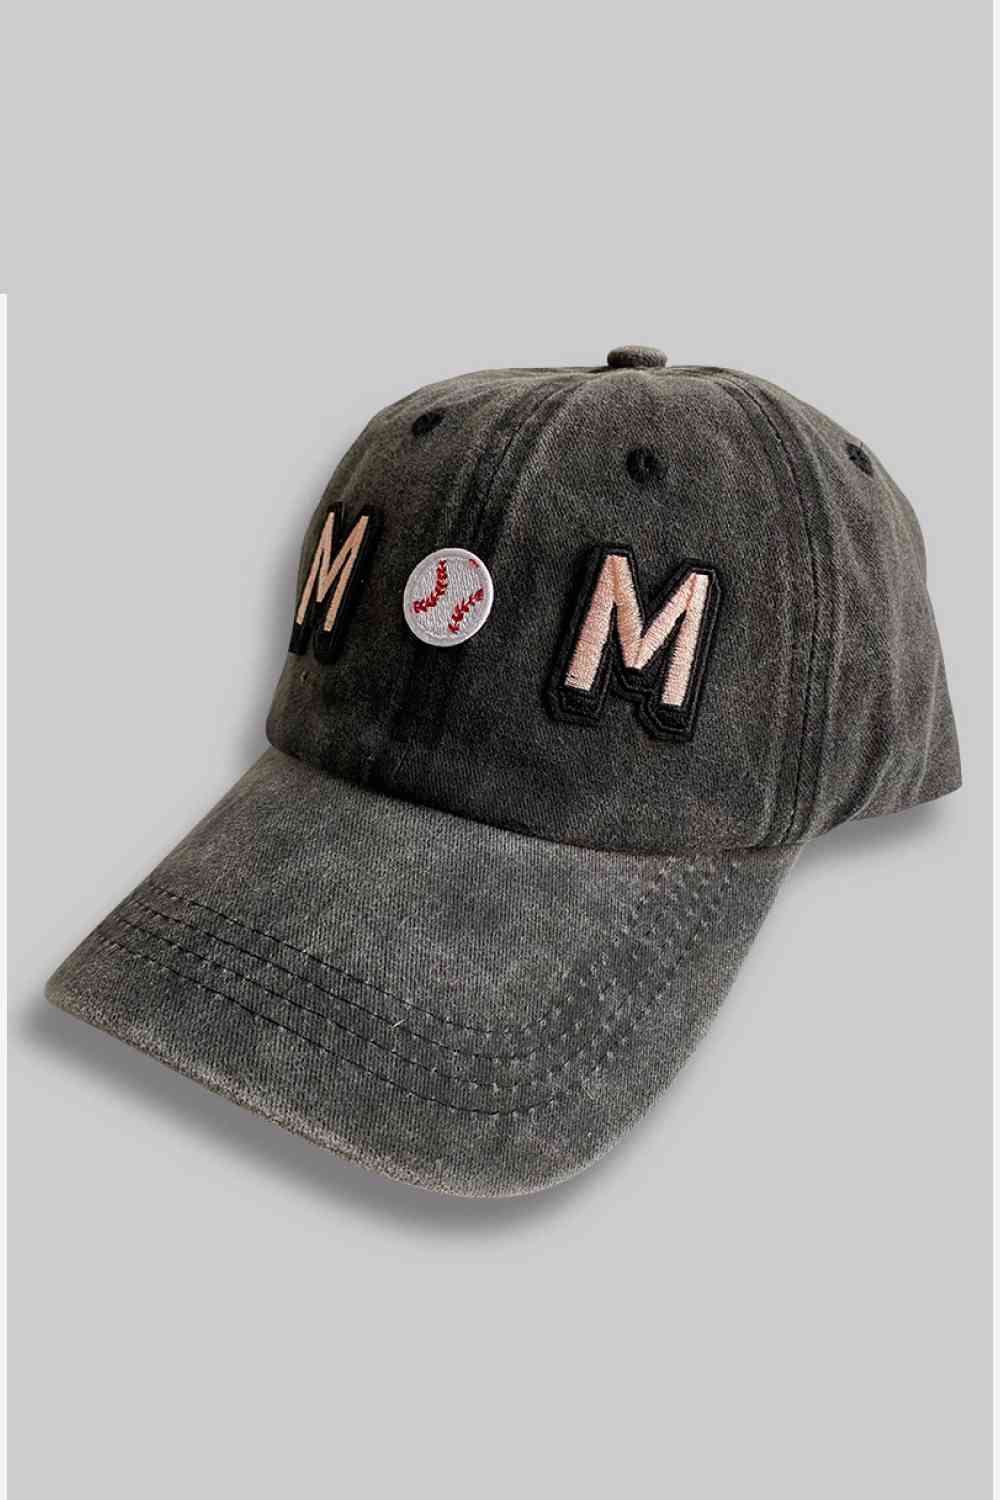 MOM Baseball Cap (Baseball)